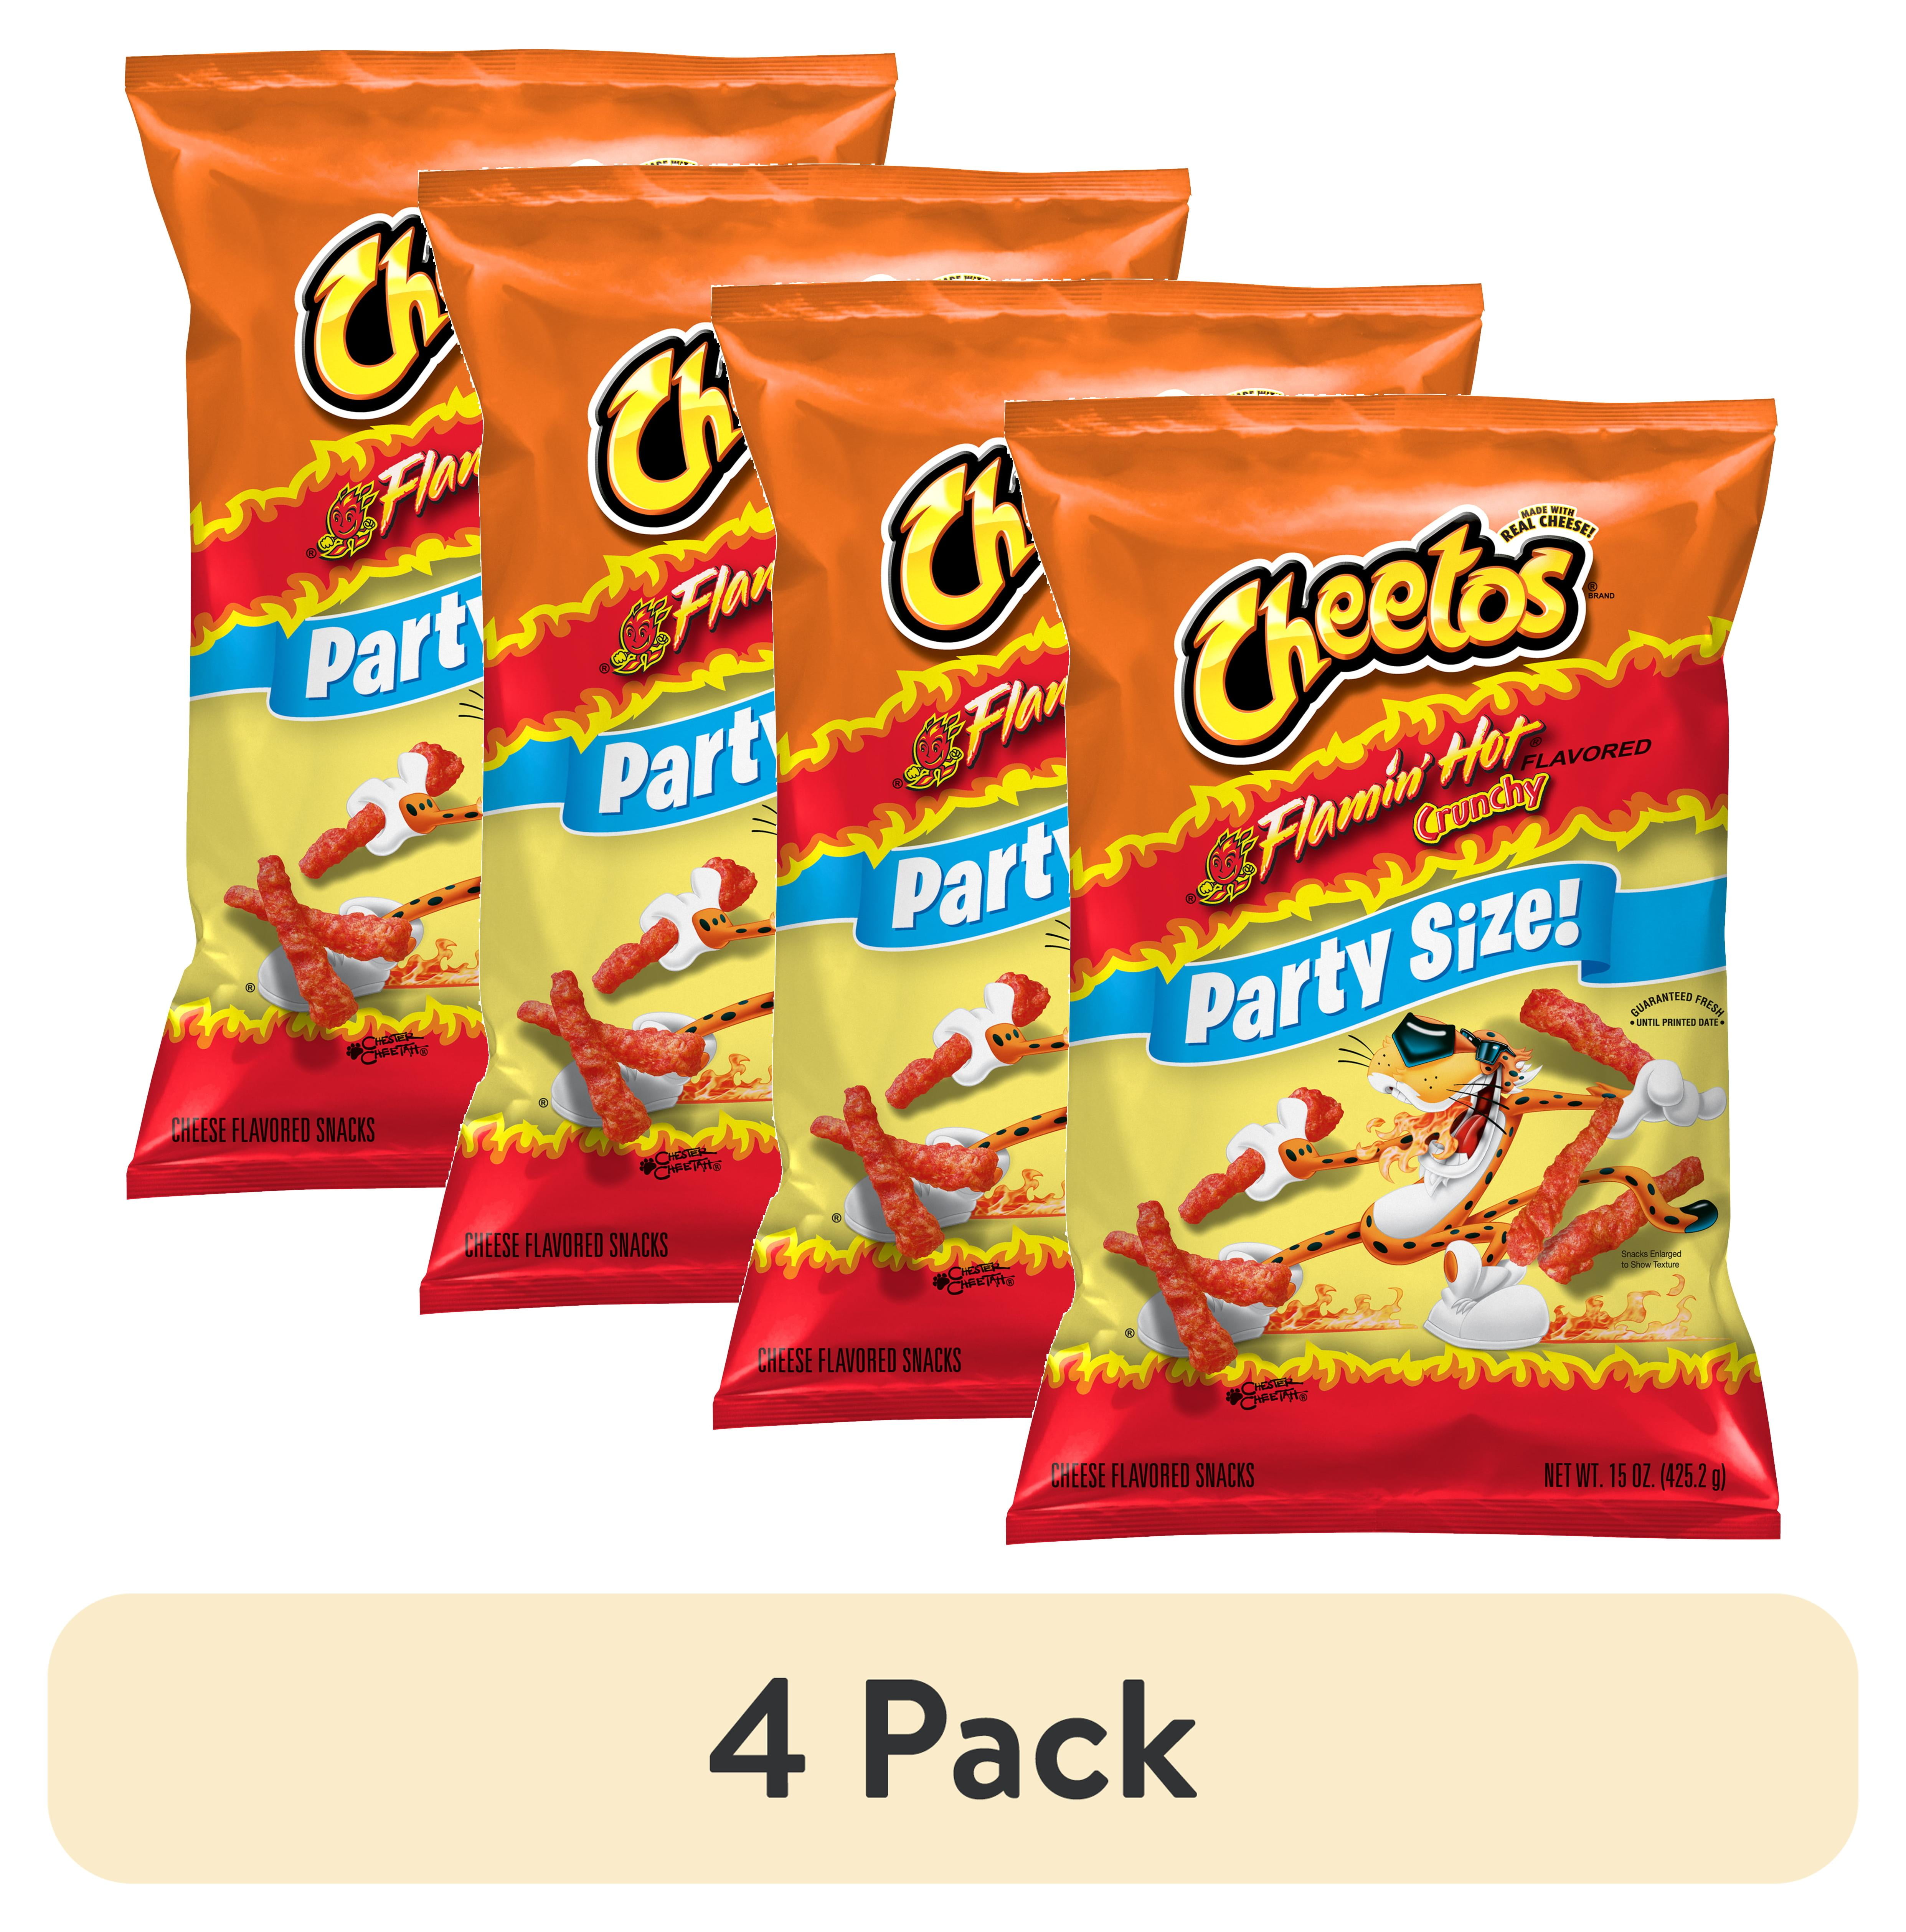 Cheetos Crunchy Flamin' Hot Cheese Flavored Snacks, 9 Oz